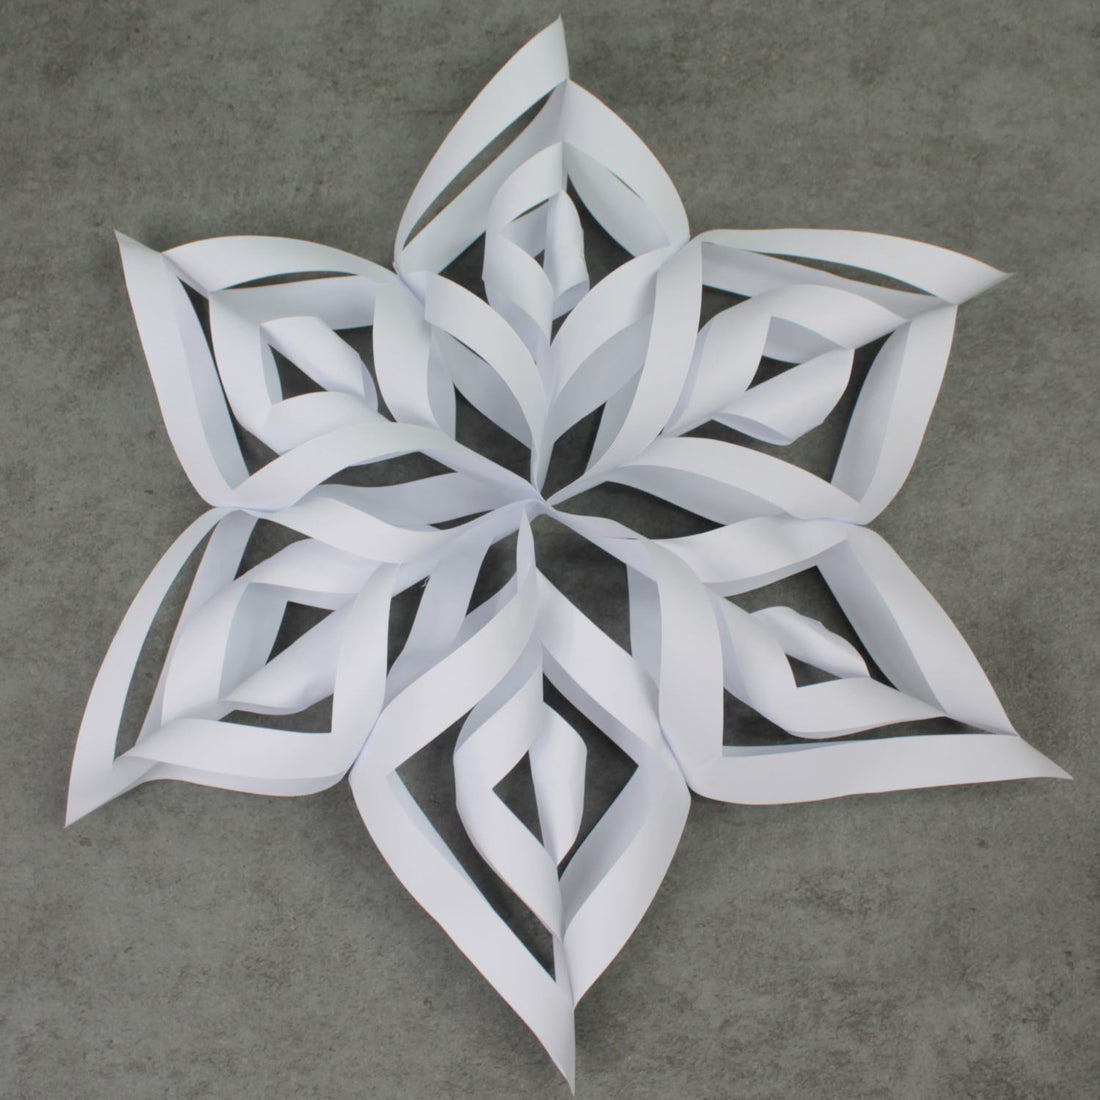 Spreading Eco-Friendly Cheer- DIY 3D Paper Snowflake